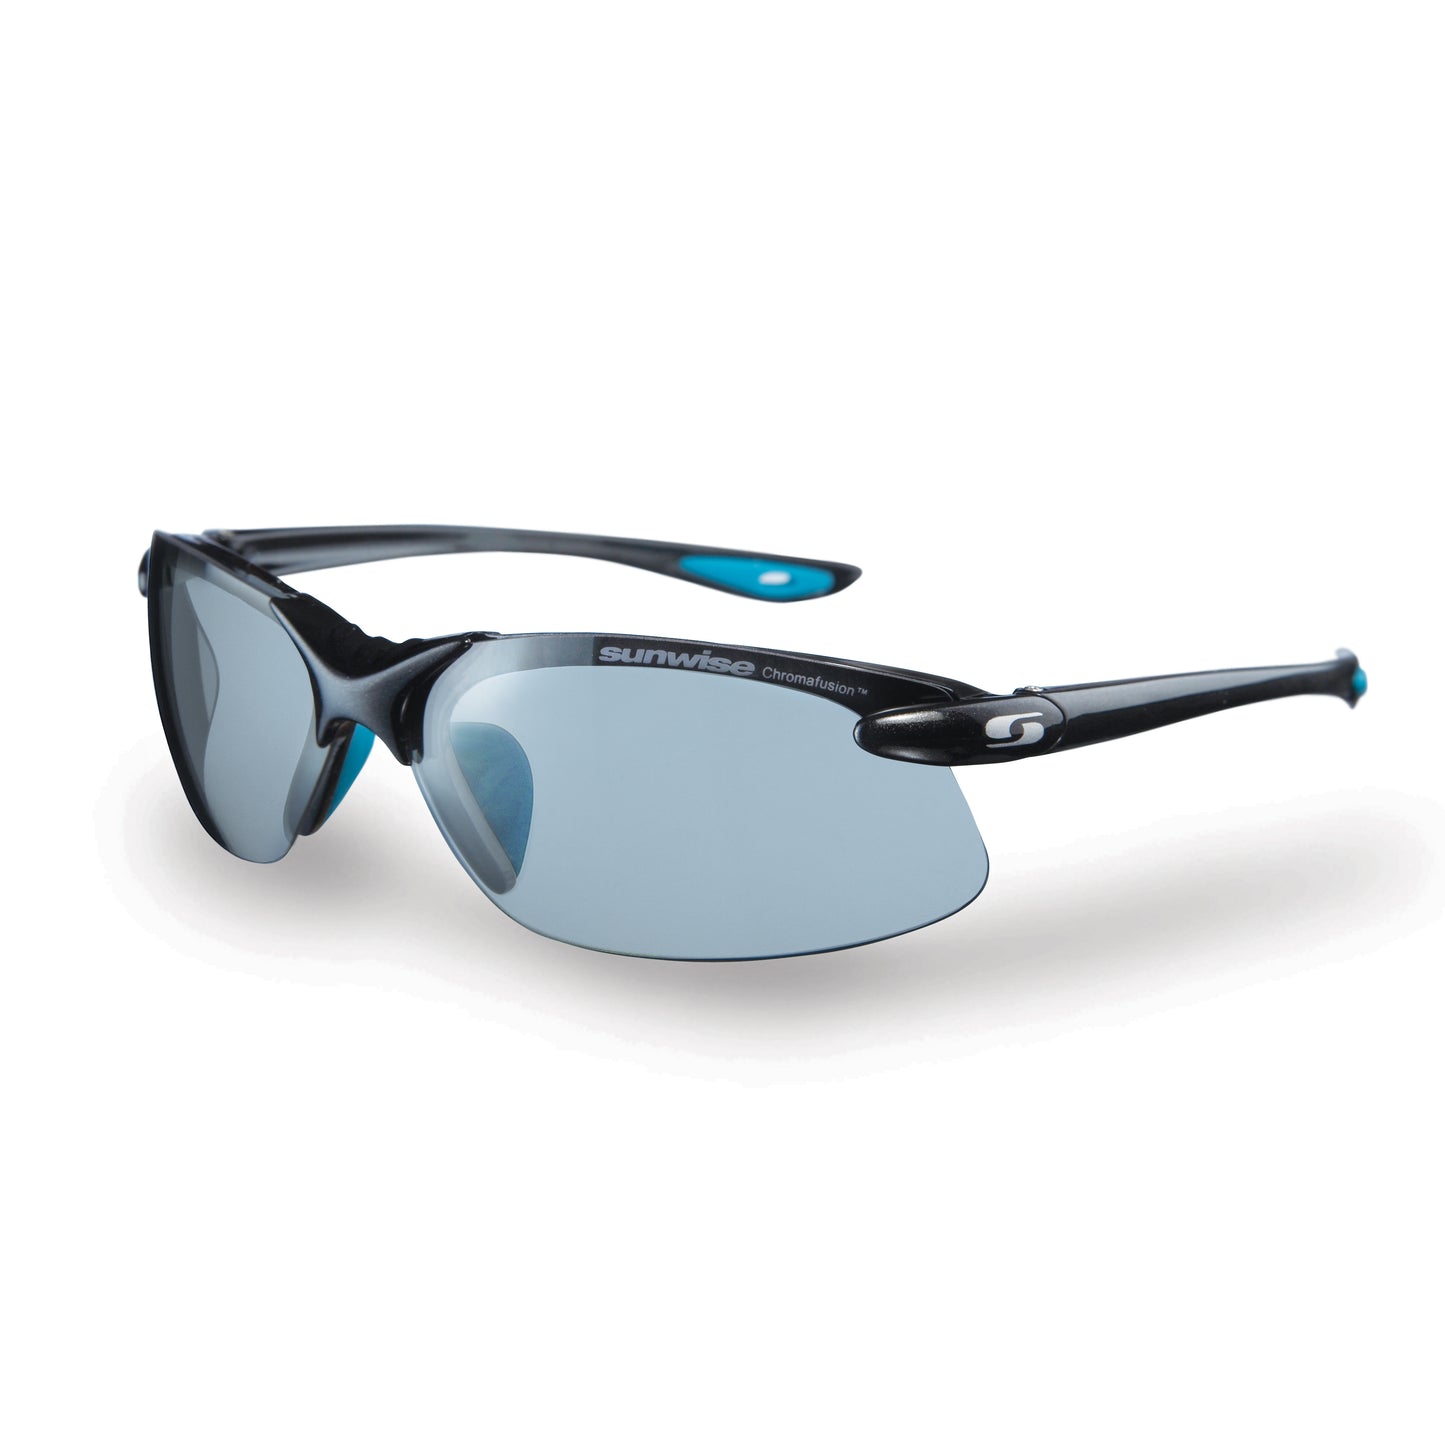 Sunwise photochromic Waterloo Sports Sunglasses in Chrome